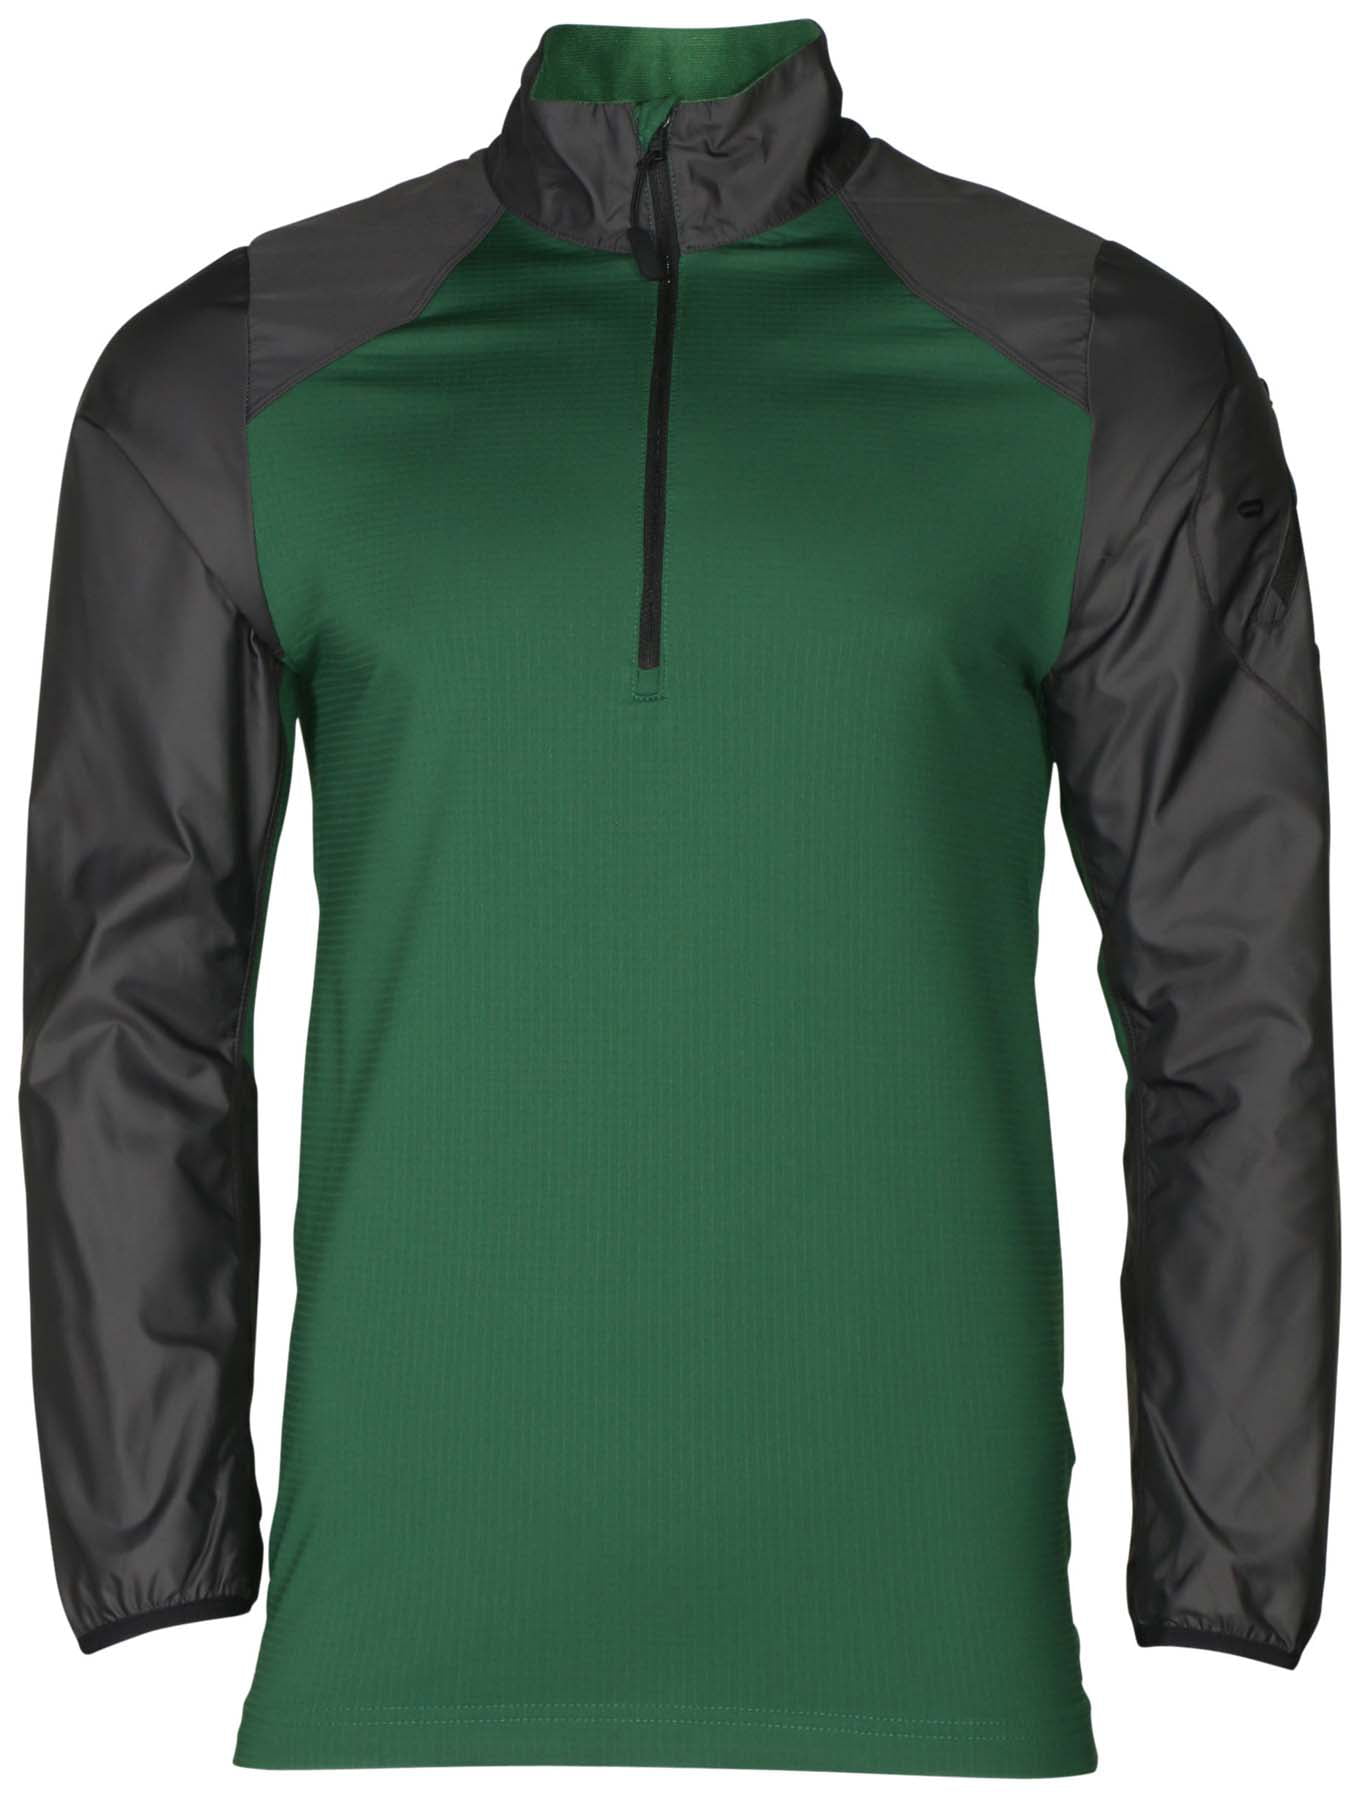 Nike - Nike Men's Dri-Fit 1/2 Zip Hybrid Mock Neck Football Shirt - Walmart.com - Walmart.com